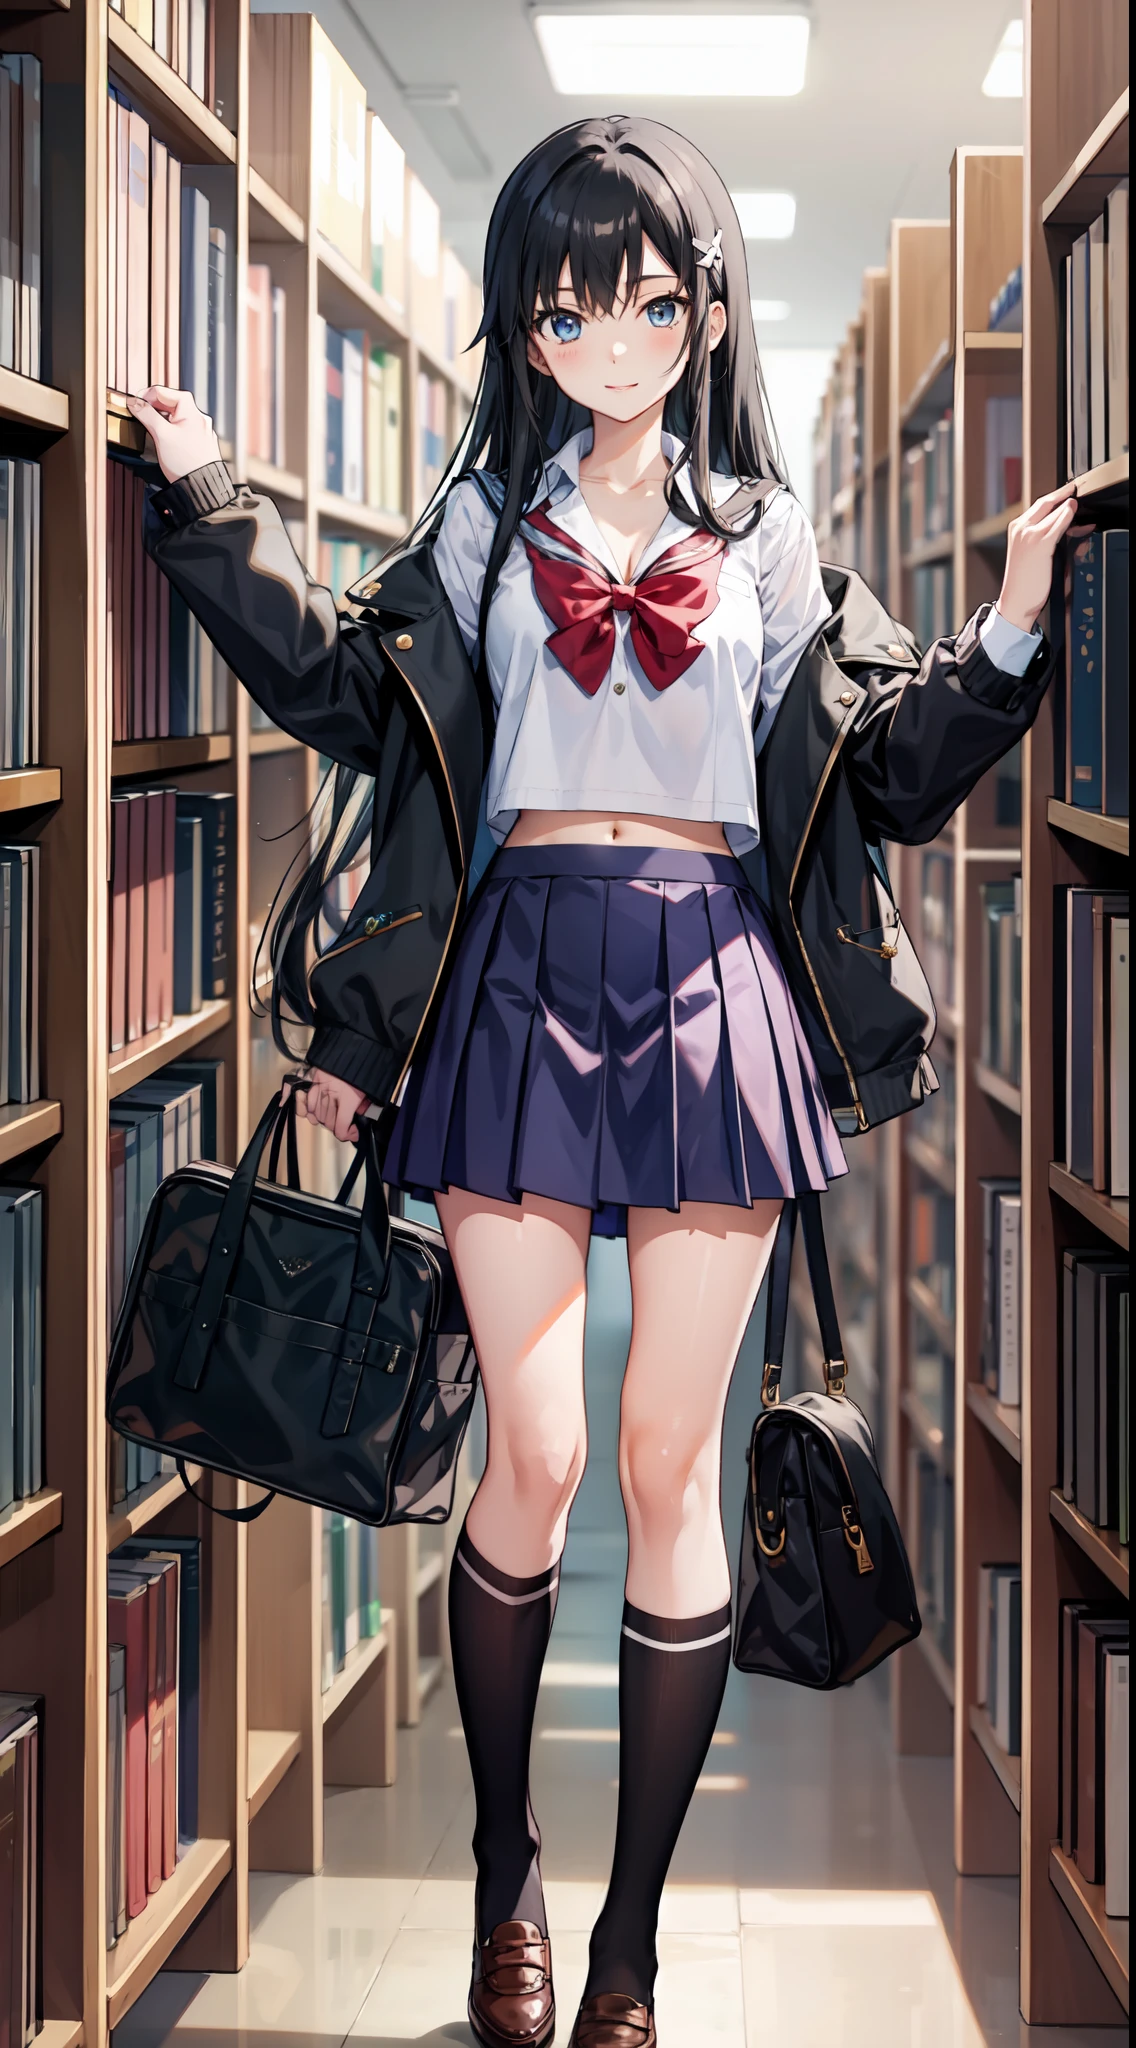 yukino yukinoshita, 長い髪, 胸の谷間, へそ, 細い脚, 黒髪, 青い目,  短いスカート, サイハイソックス, ティーン, ハッピー, , 図書館, 立っている